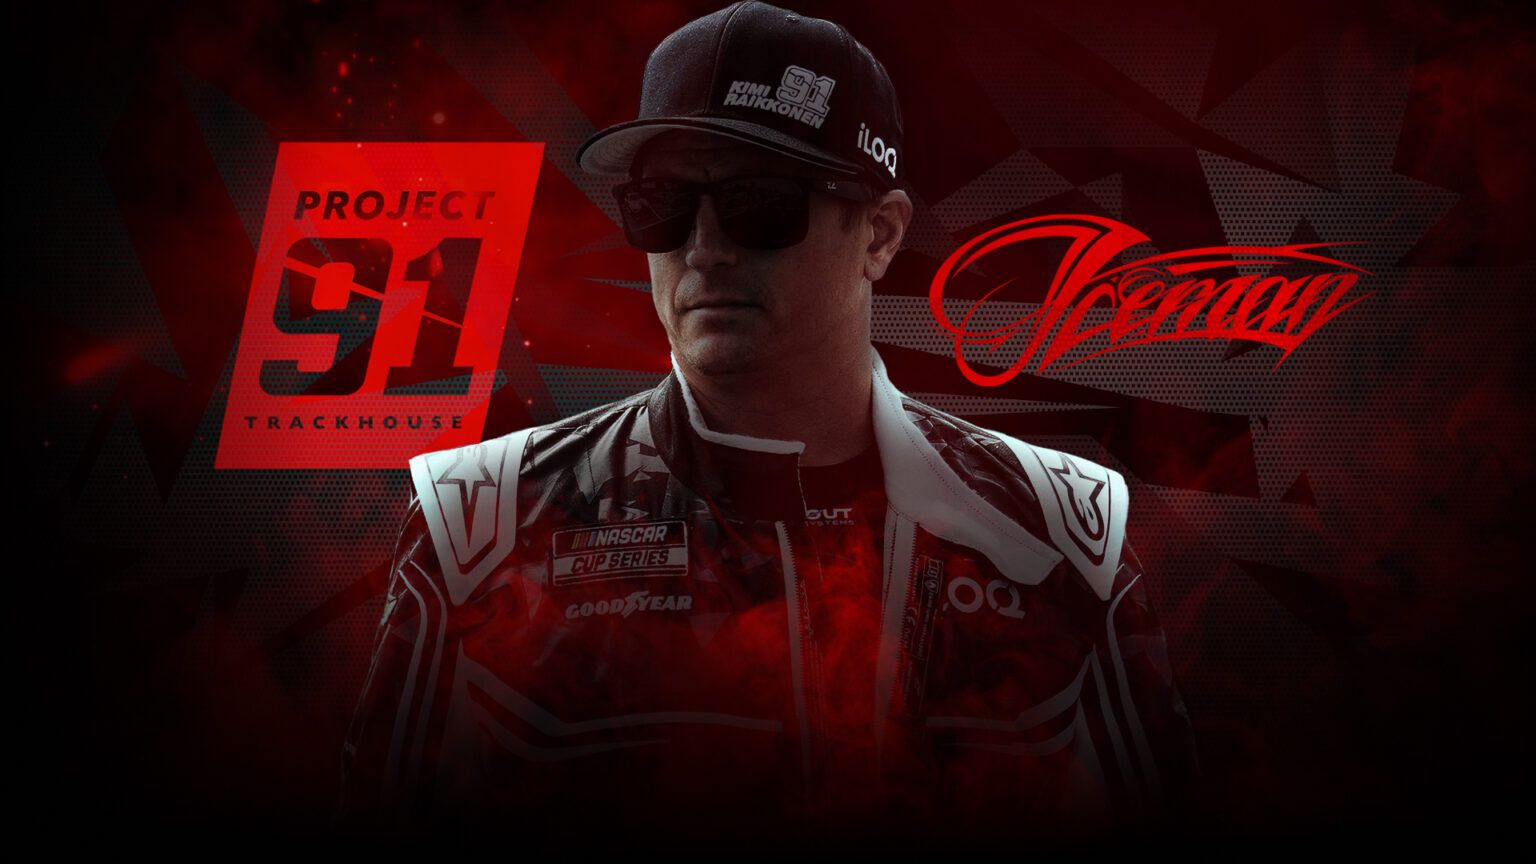 Kimi Raikkonen, NASCAR